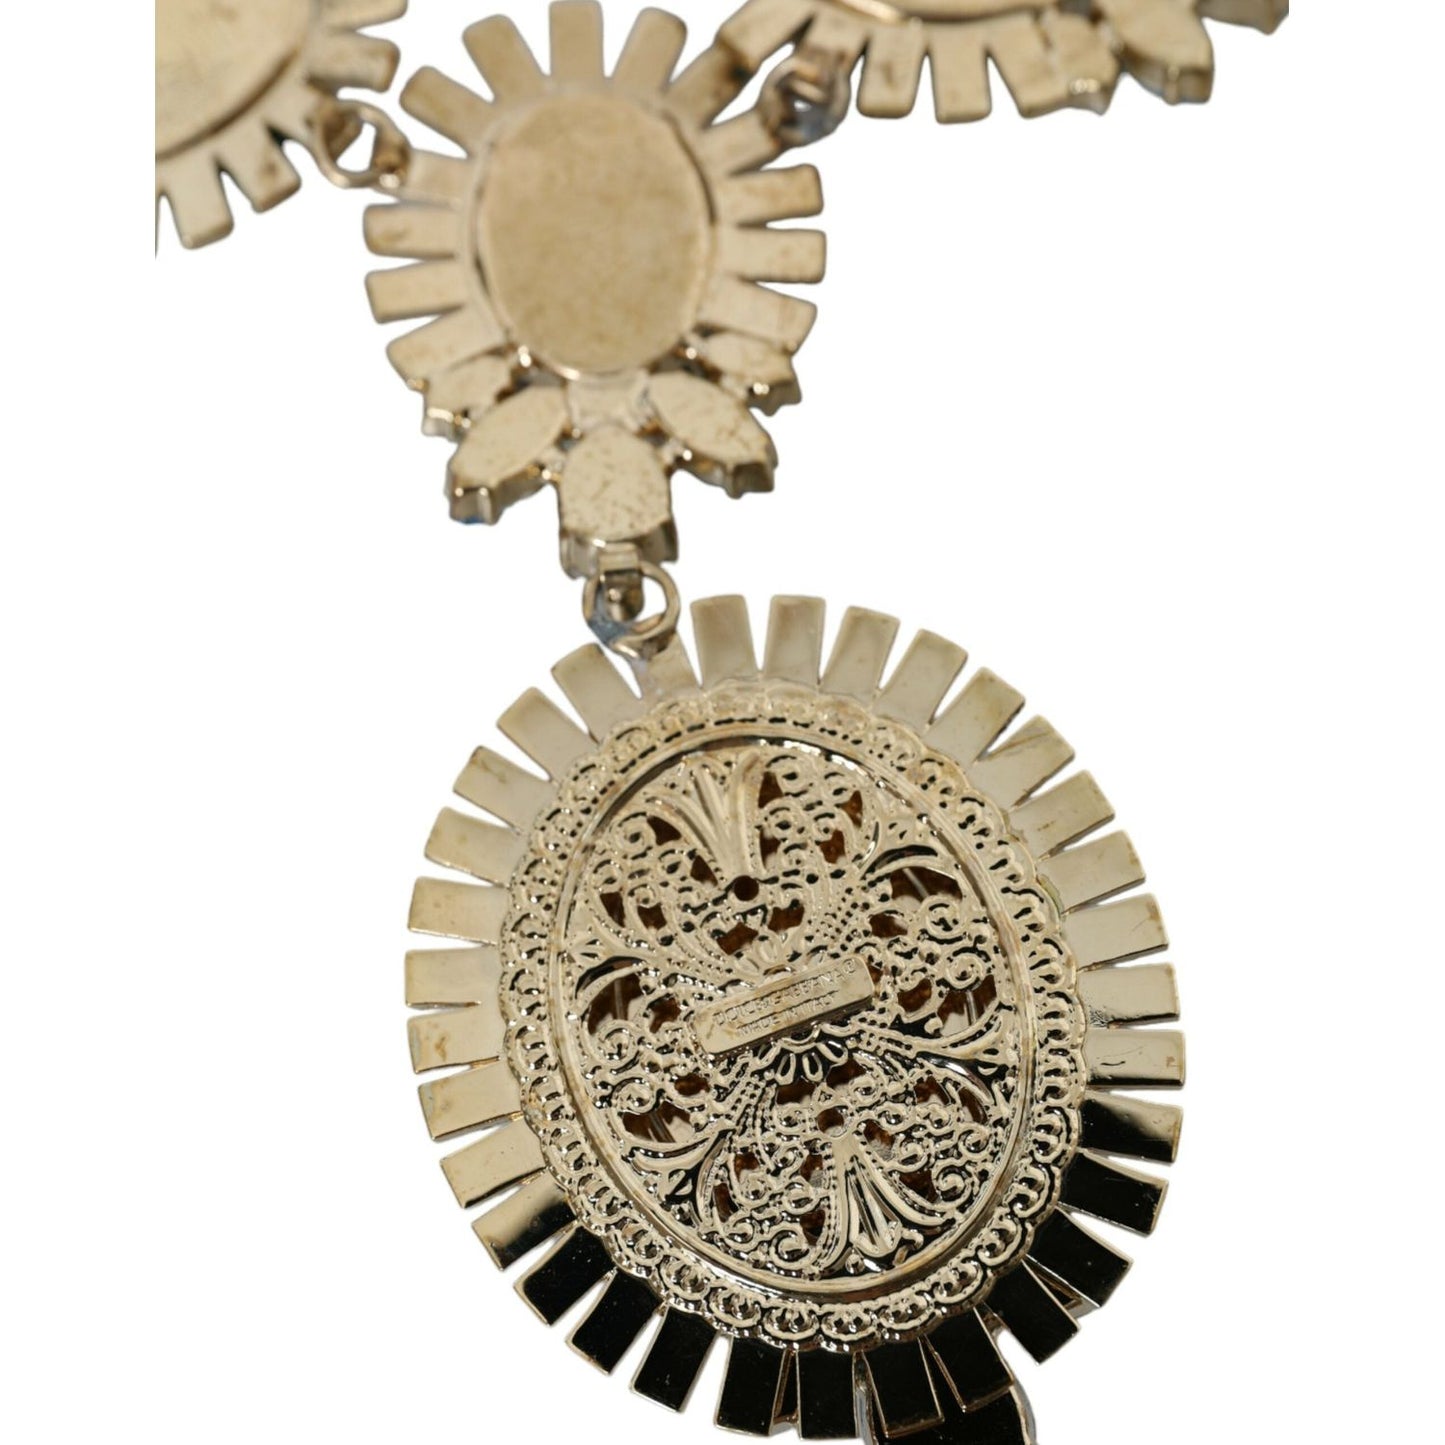 Dolce & Gabbana Gold ToneBrass PIETRE OVALI Crystal Embellished Necklace gold-tonebrass-pietre-ovali-crystal-embellished-necklace